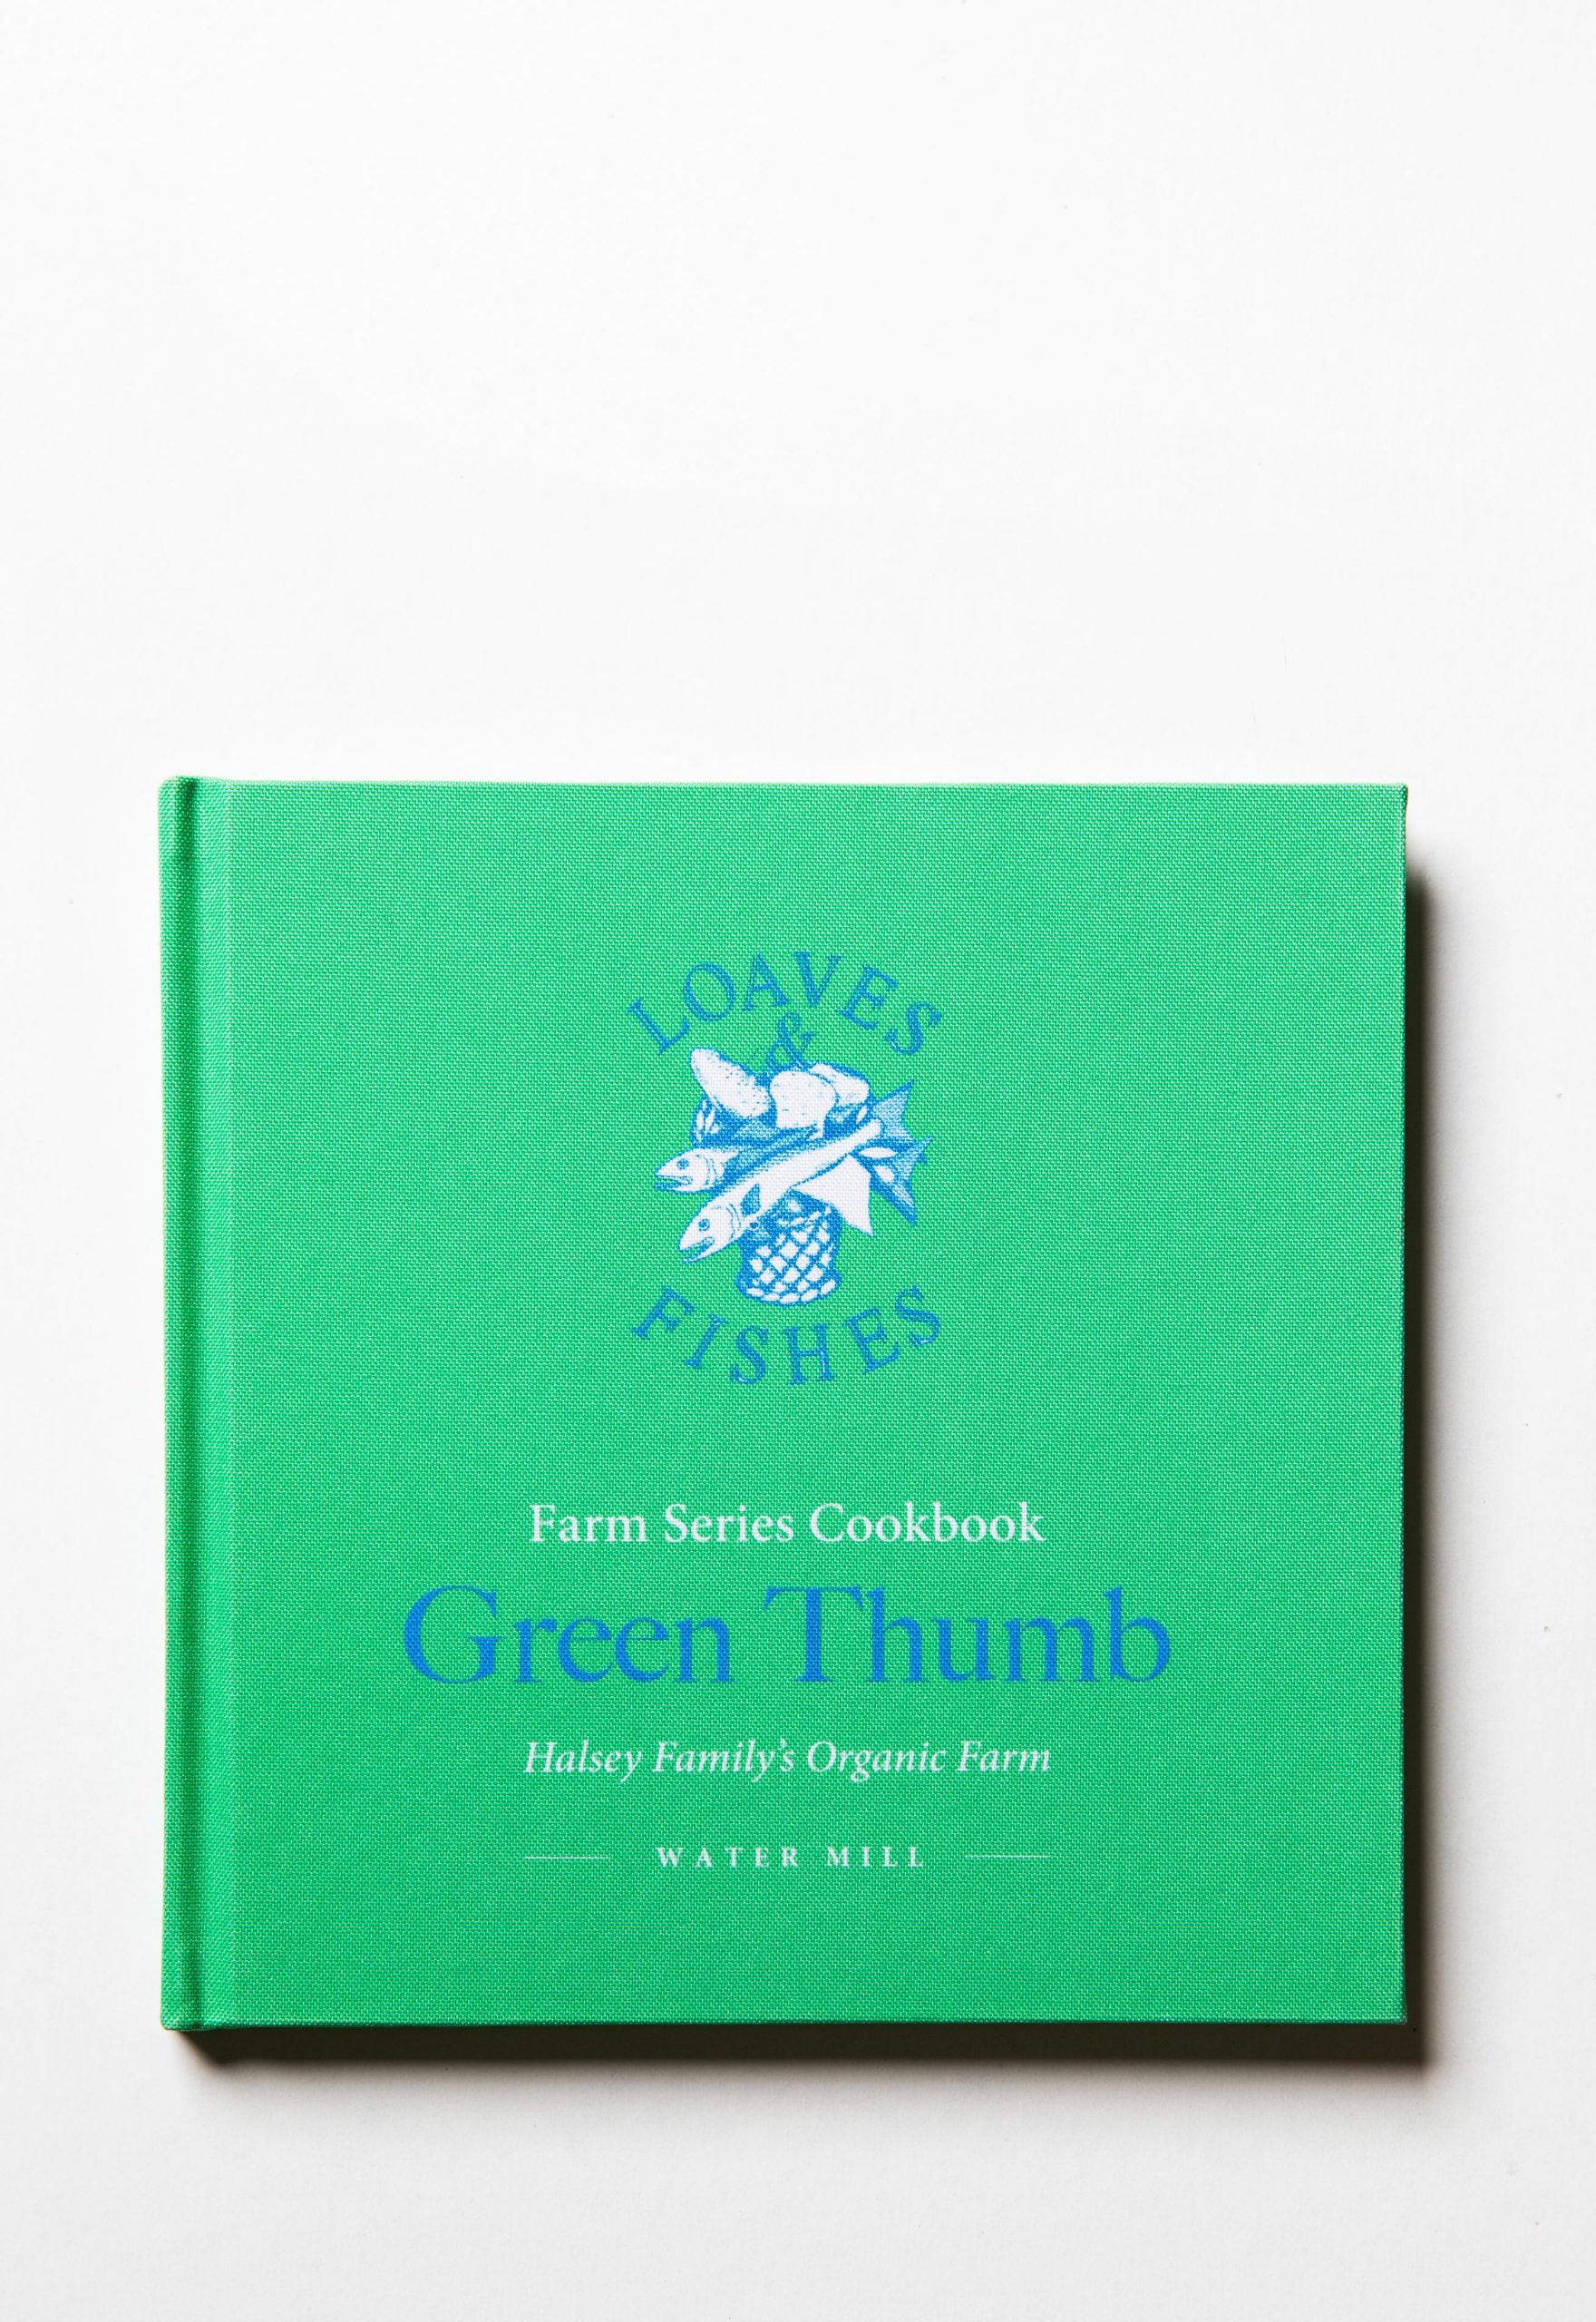 The Green Thumb cookbook.